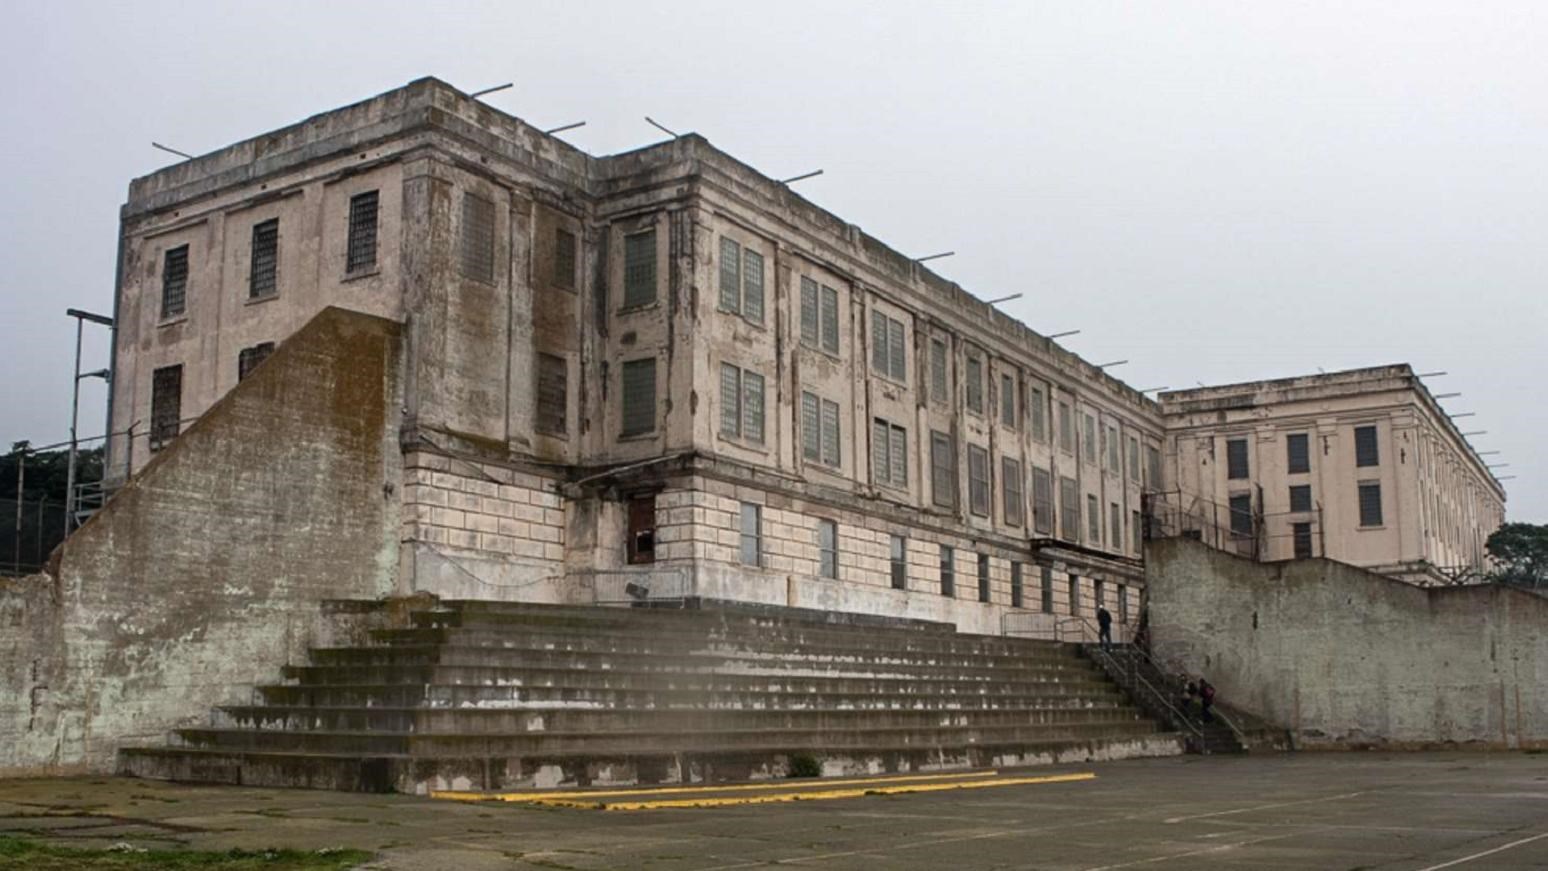 View of the main Alcatraz Cellhouse